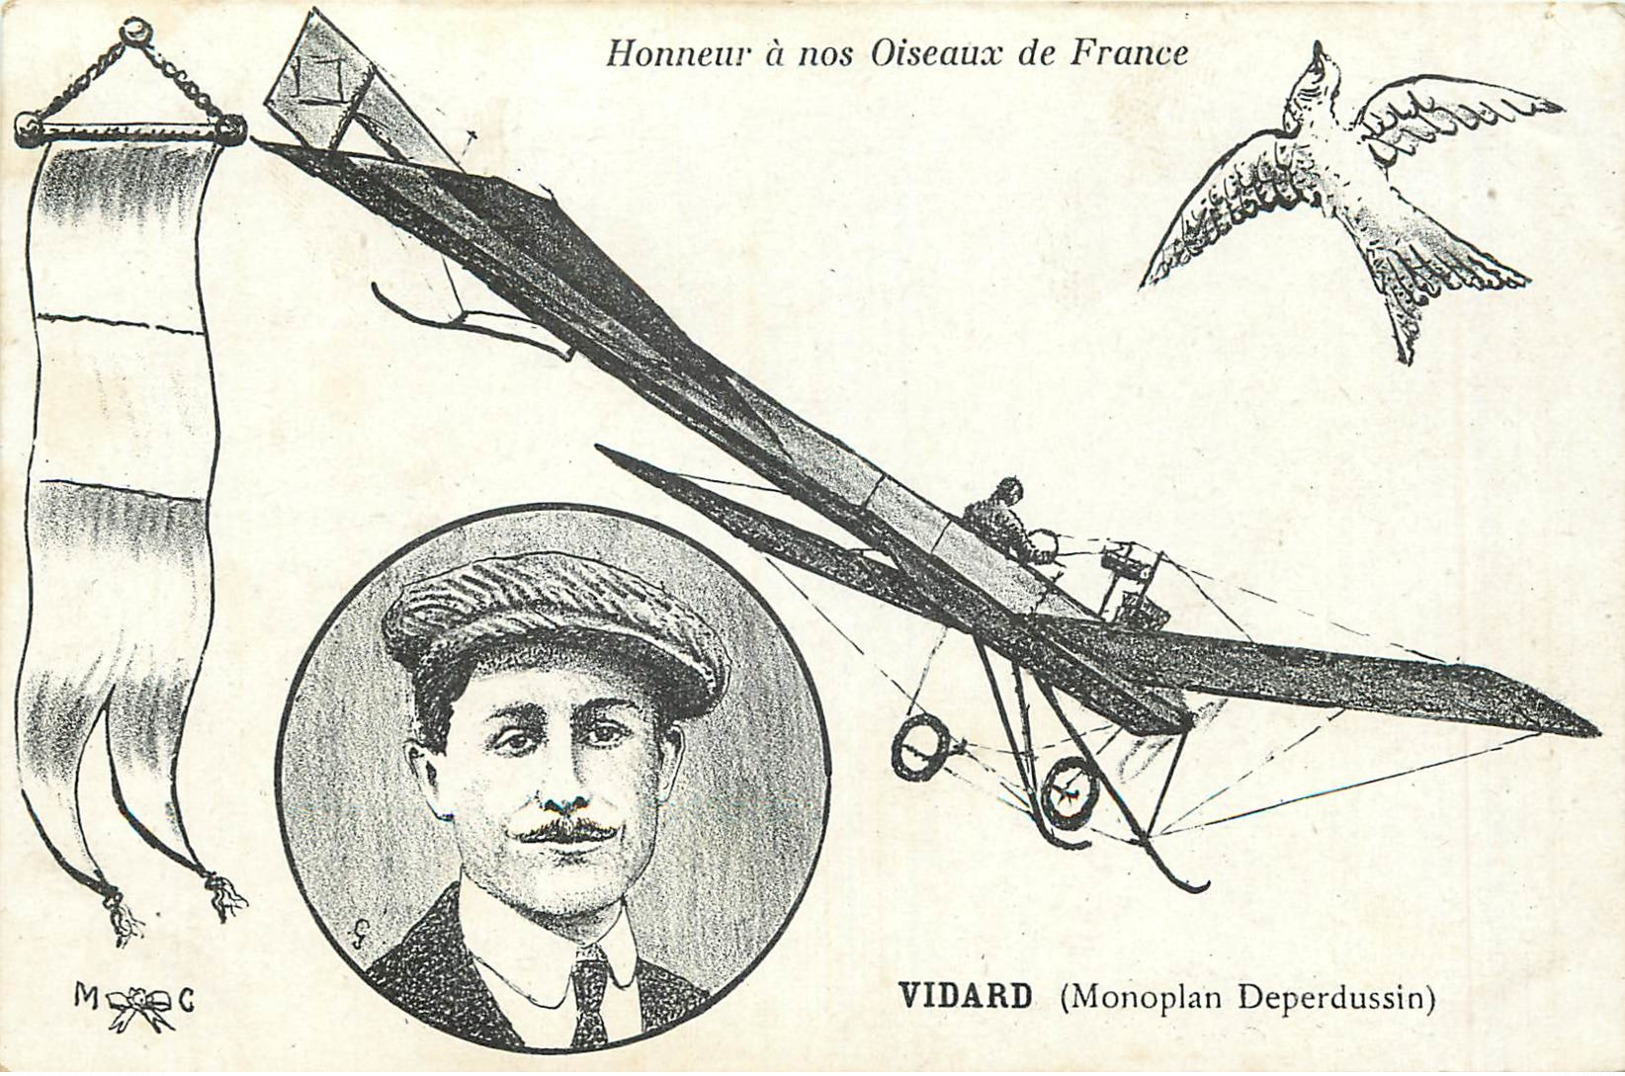 HONNEUR A NOS OISEAUX DE FRANCE - VIDARD - MONOPLAN DEPERDUSSIN - Aviateurs